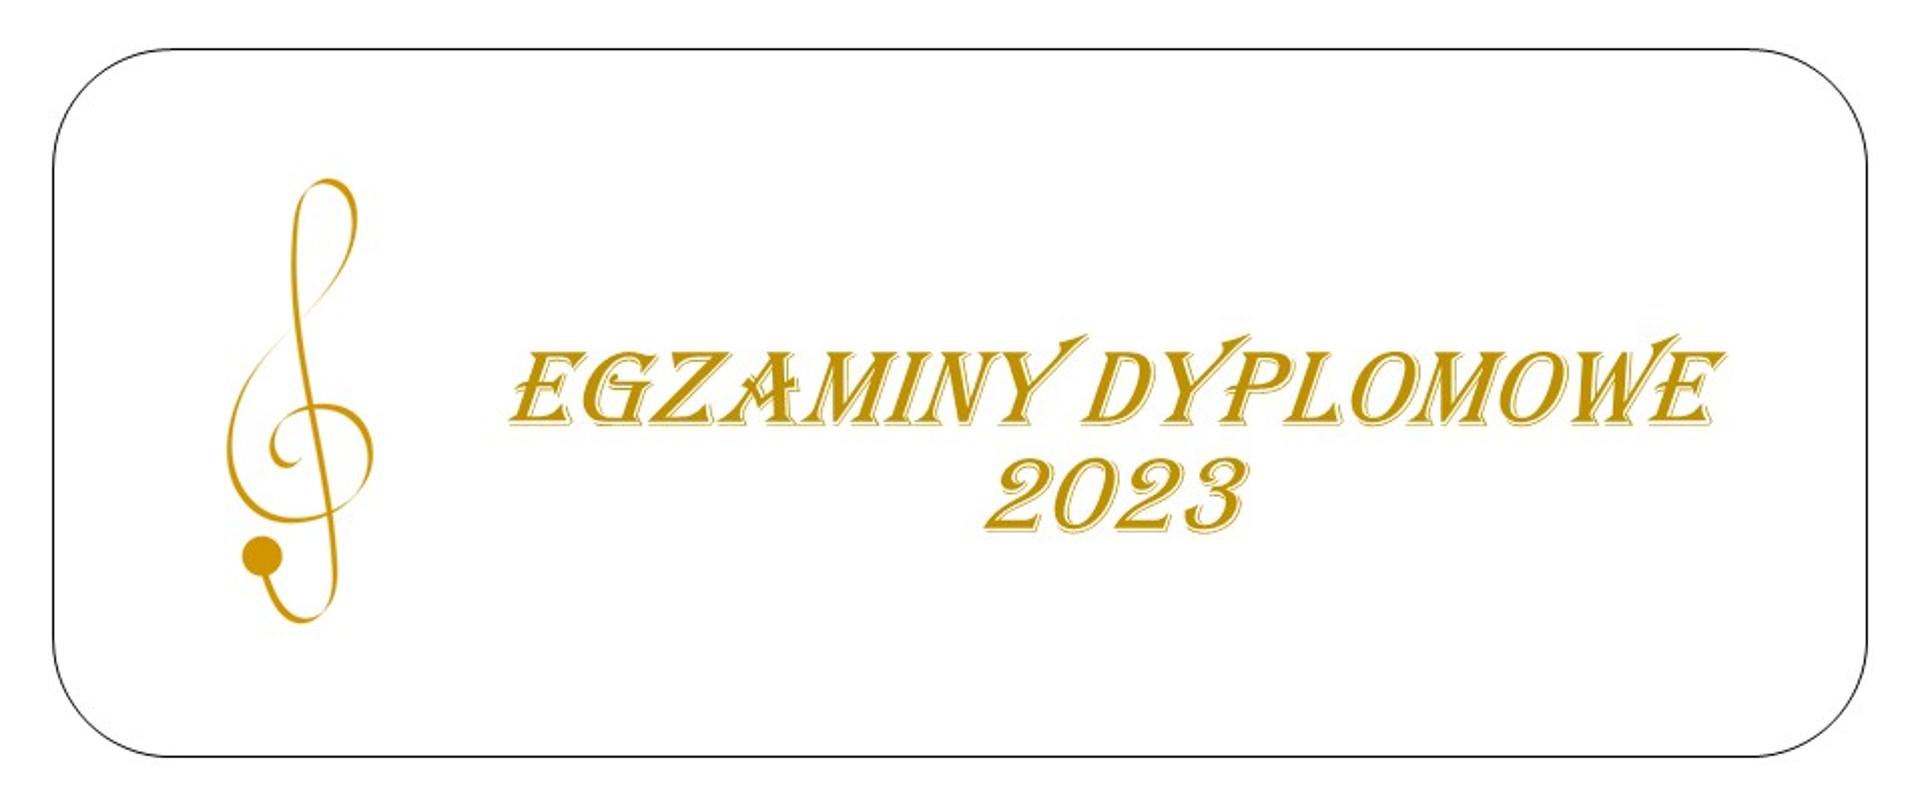 Baner z napisem Egzaminy dyplomowe 2023